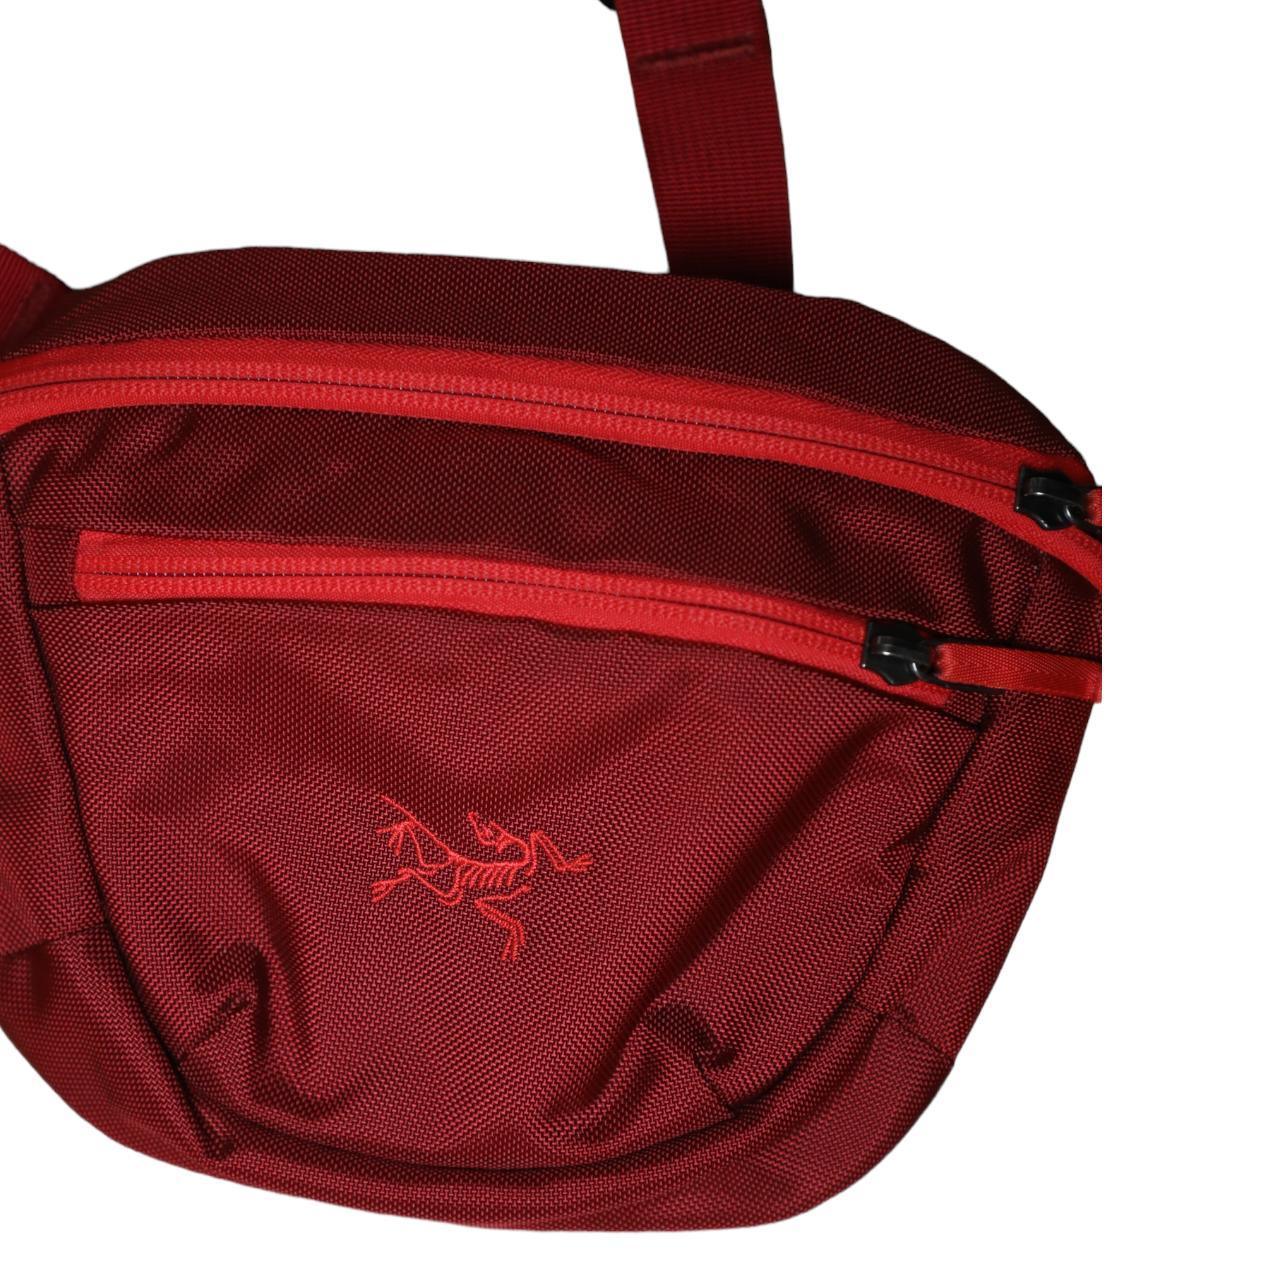 ARC'TERYX shoulder bag Red/nylon - Known Source